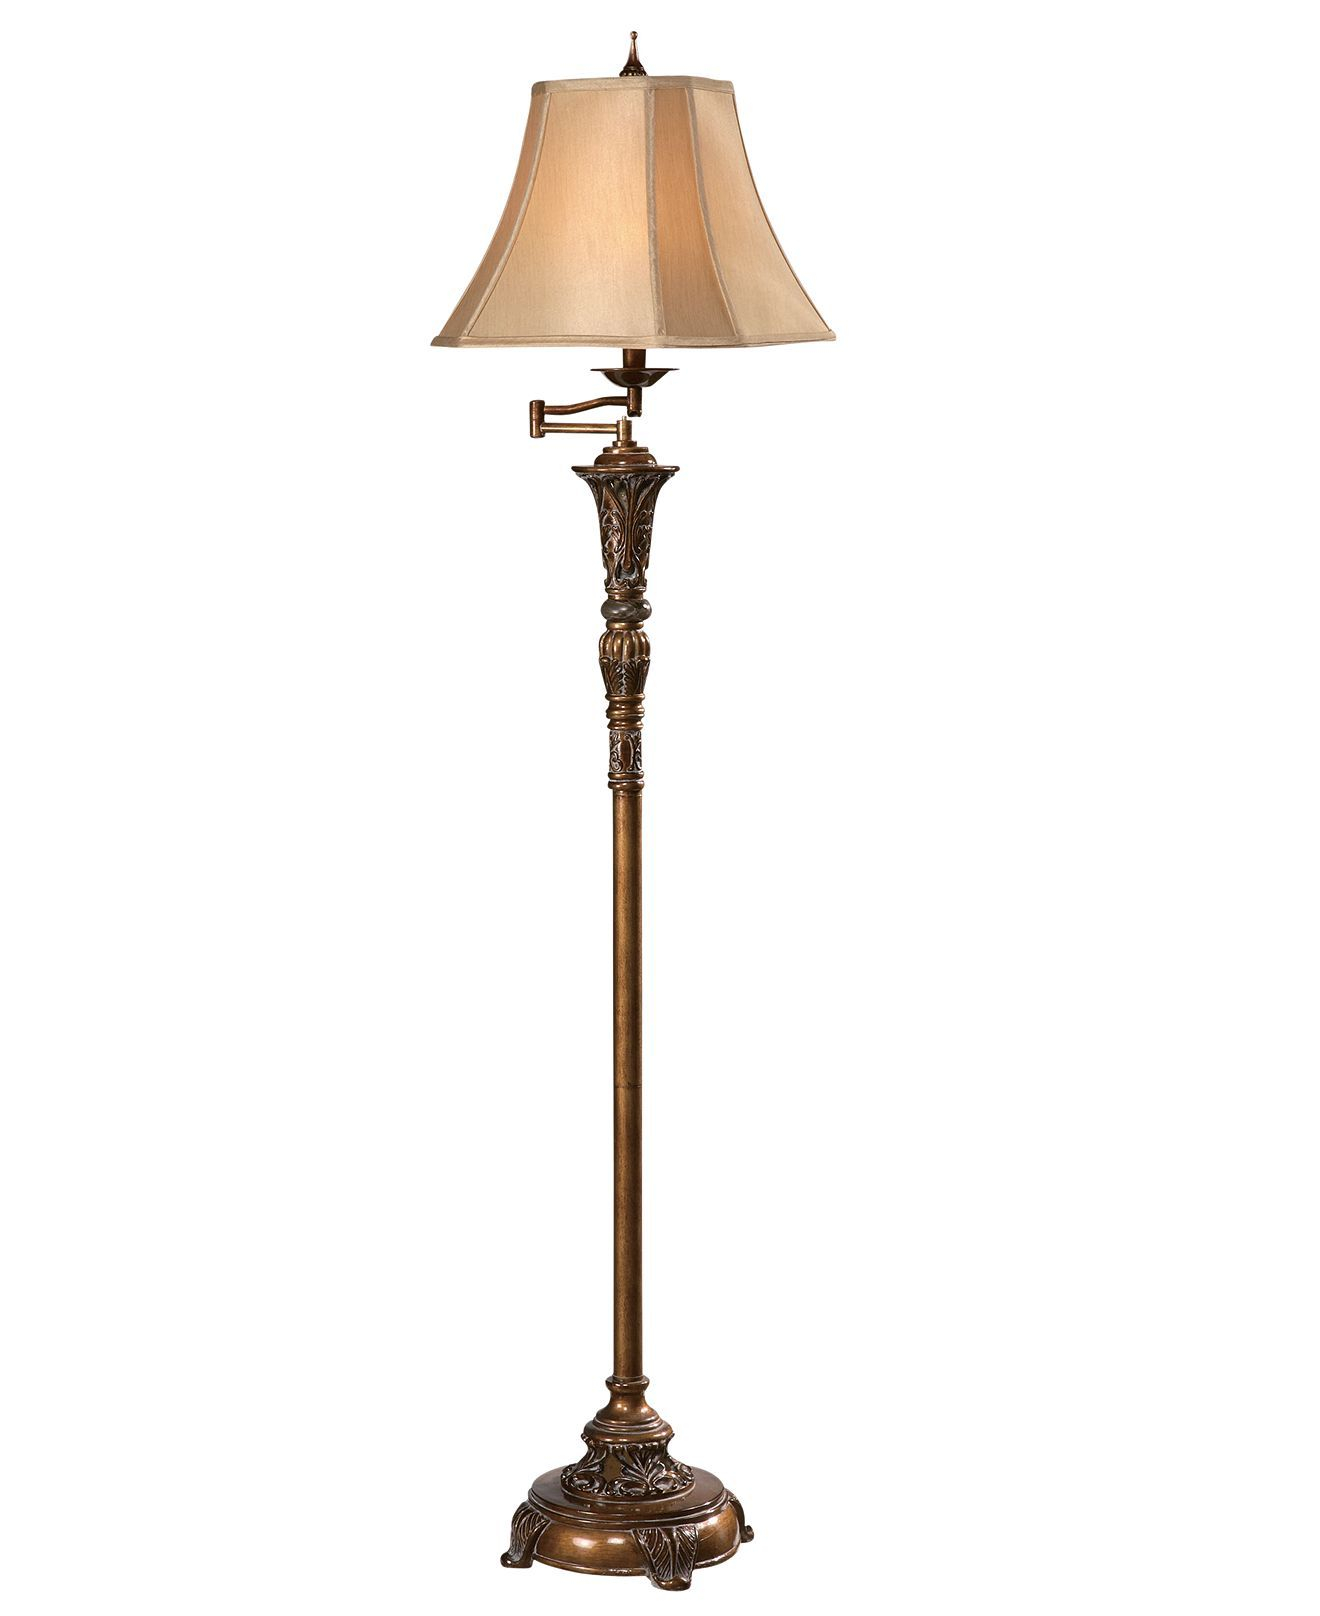 Crestview Floor Lamp London Avenue Floor Lamps For The regarding sizing 1320 X 1616